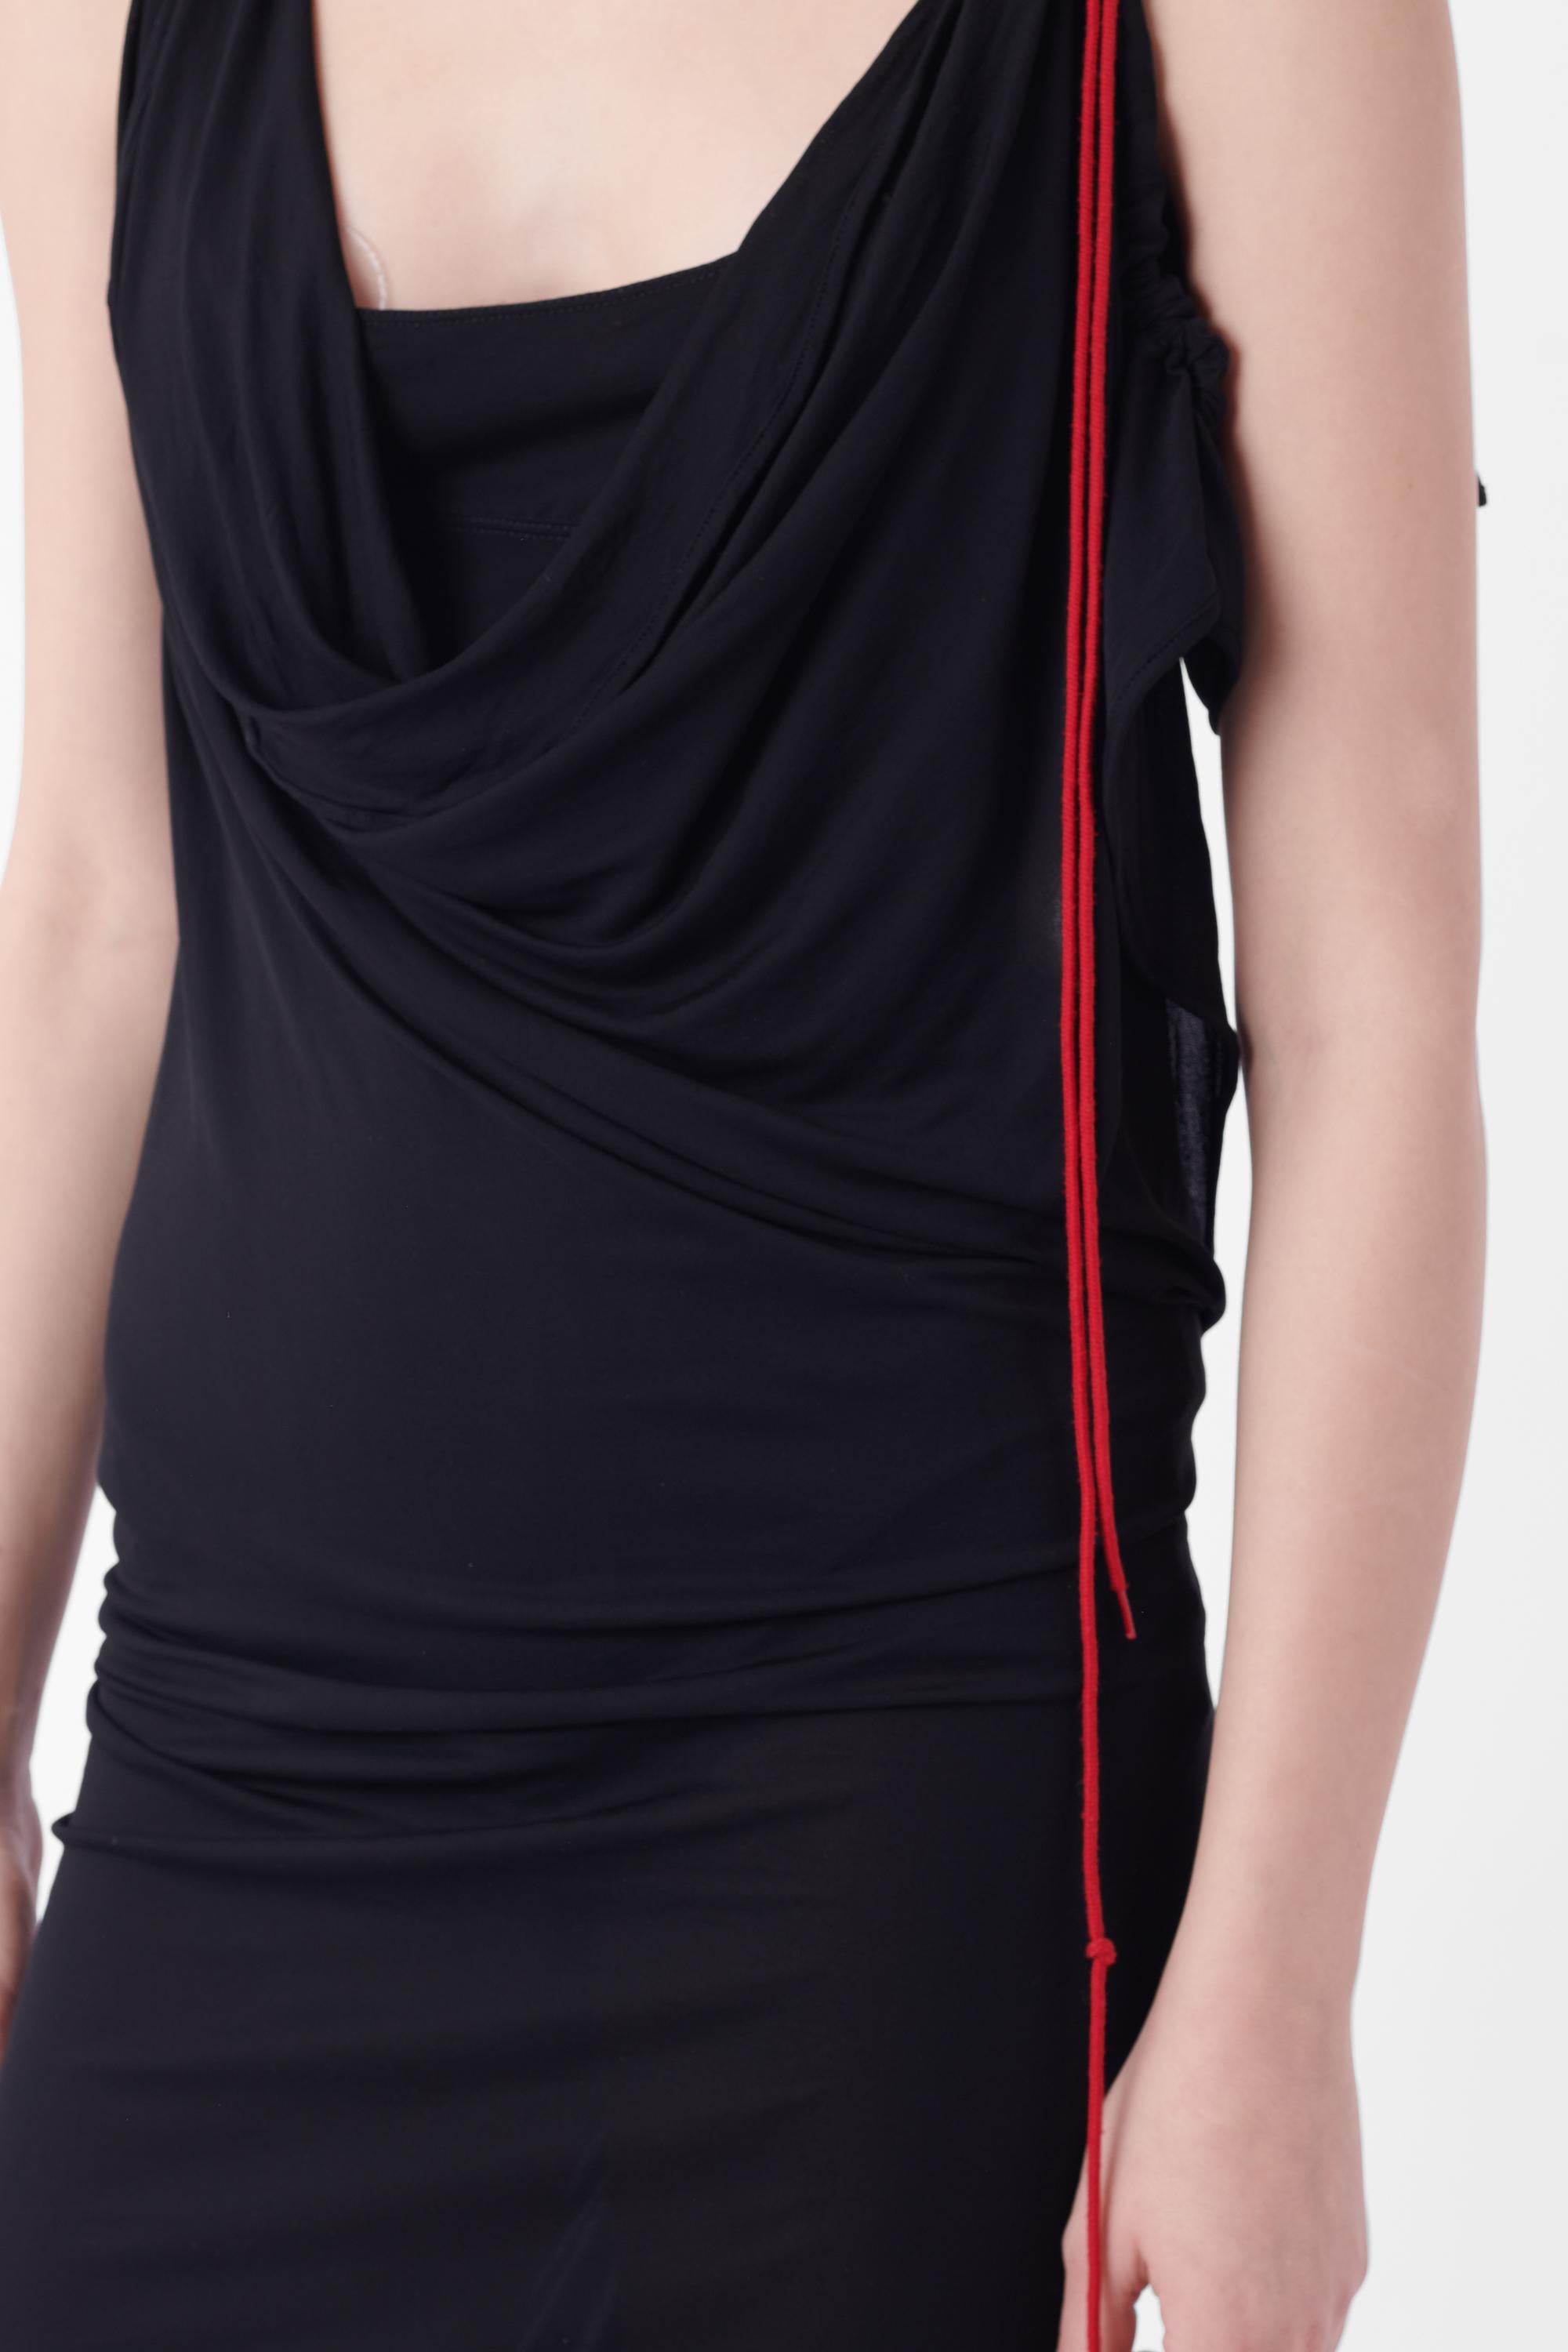 Women's Vivienne Westwood S/S 2020 Runway Backless Black Dress For Sale